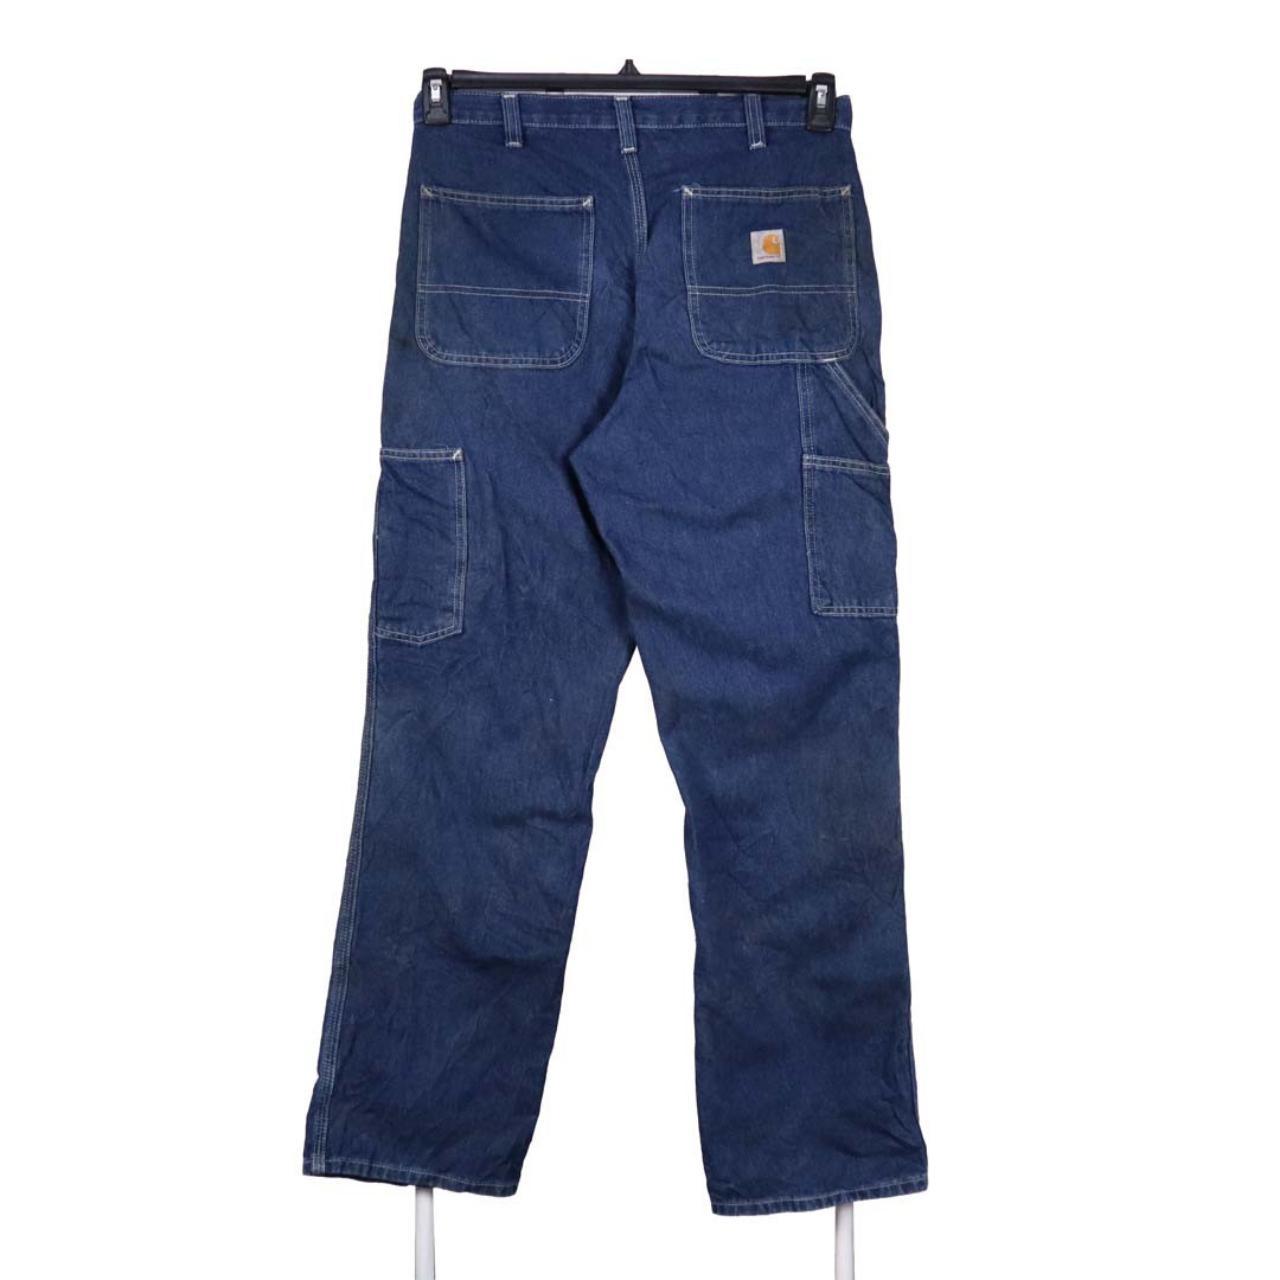 Vintage Carhartt Jeans / Pants Carhartt 90's Jeans... - Depop